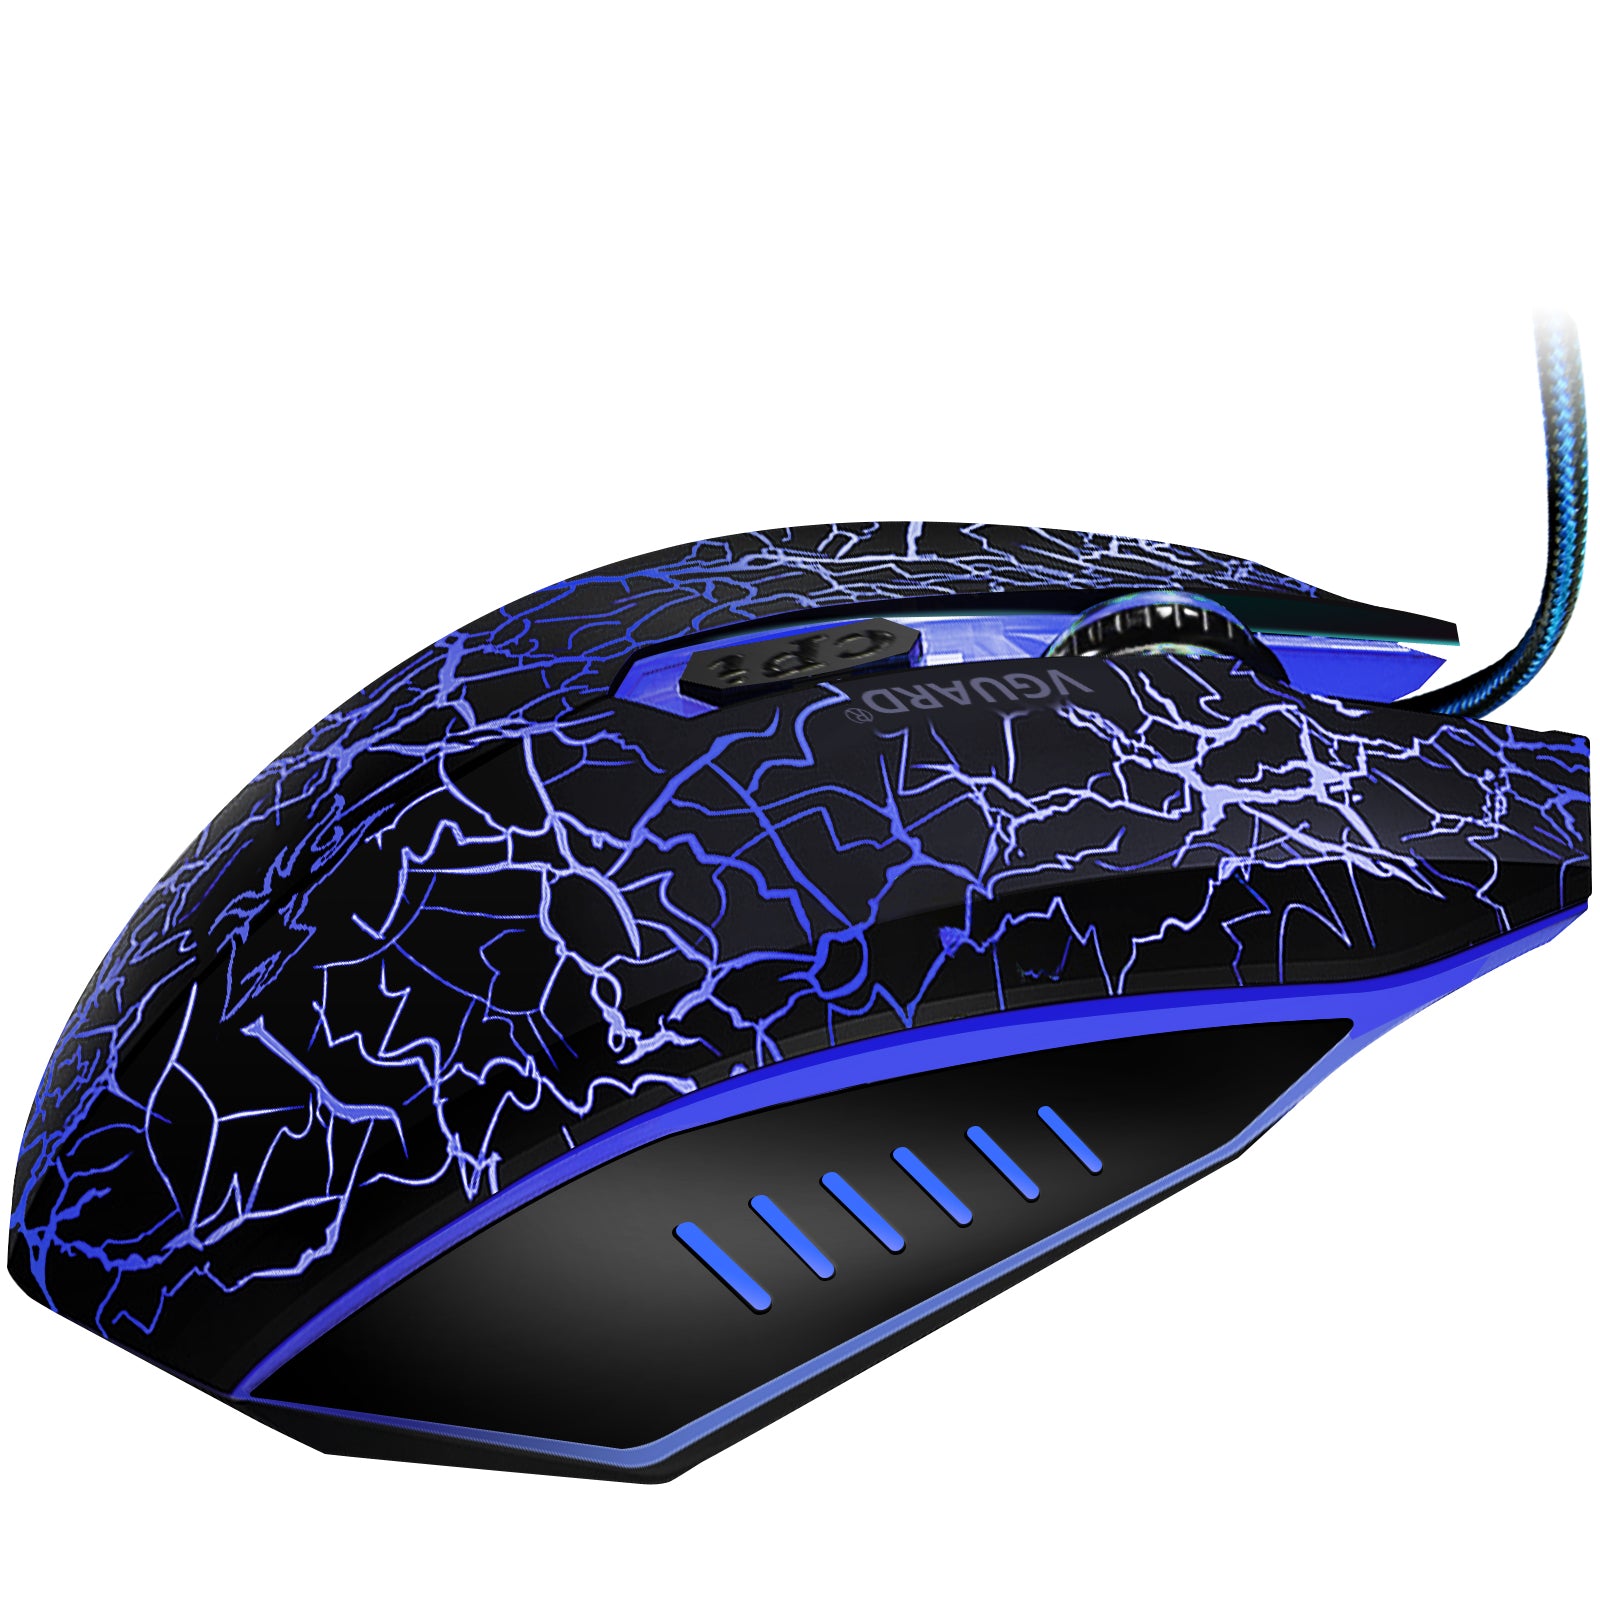 VGUARD Gaming Mouse Black(Upgraded Version) UPC: 663274842242